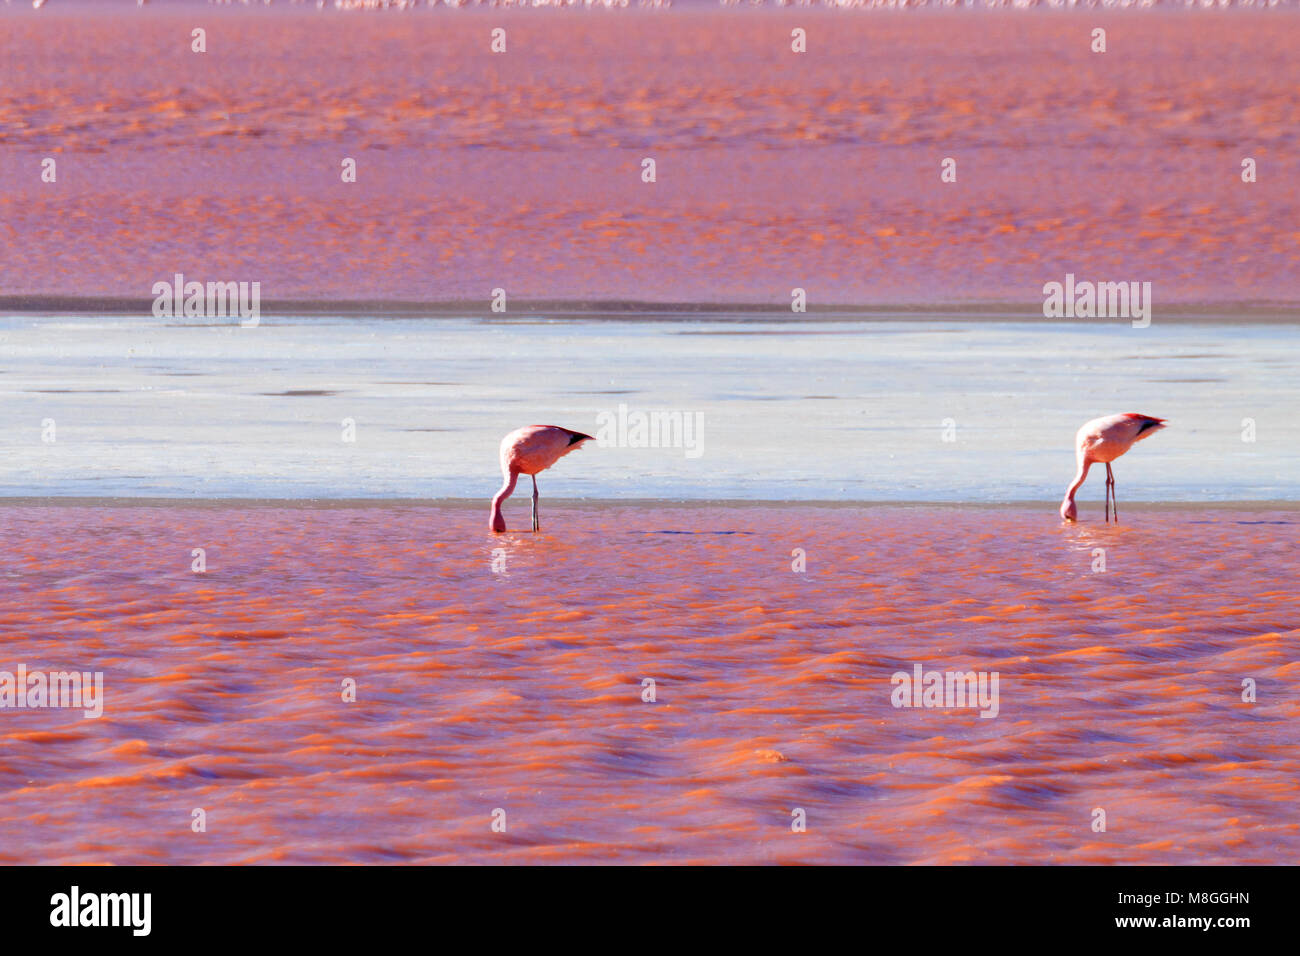 Laguna Colorada flamingos, Bolivia. Puna flamingo. Andean wildlife. Red lagoon Stock Photo